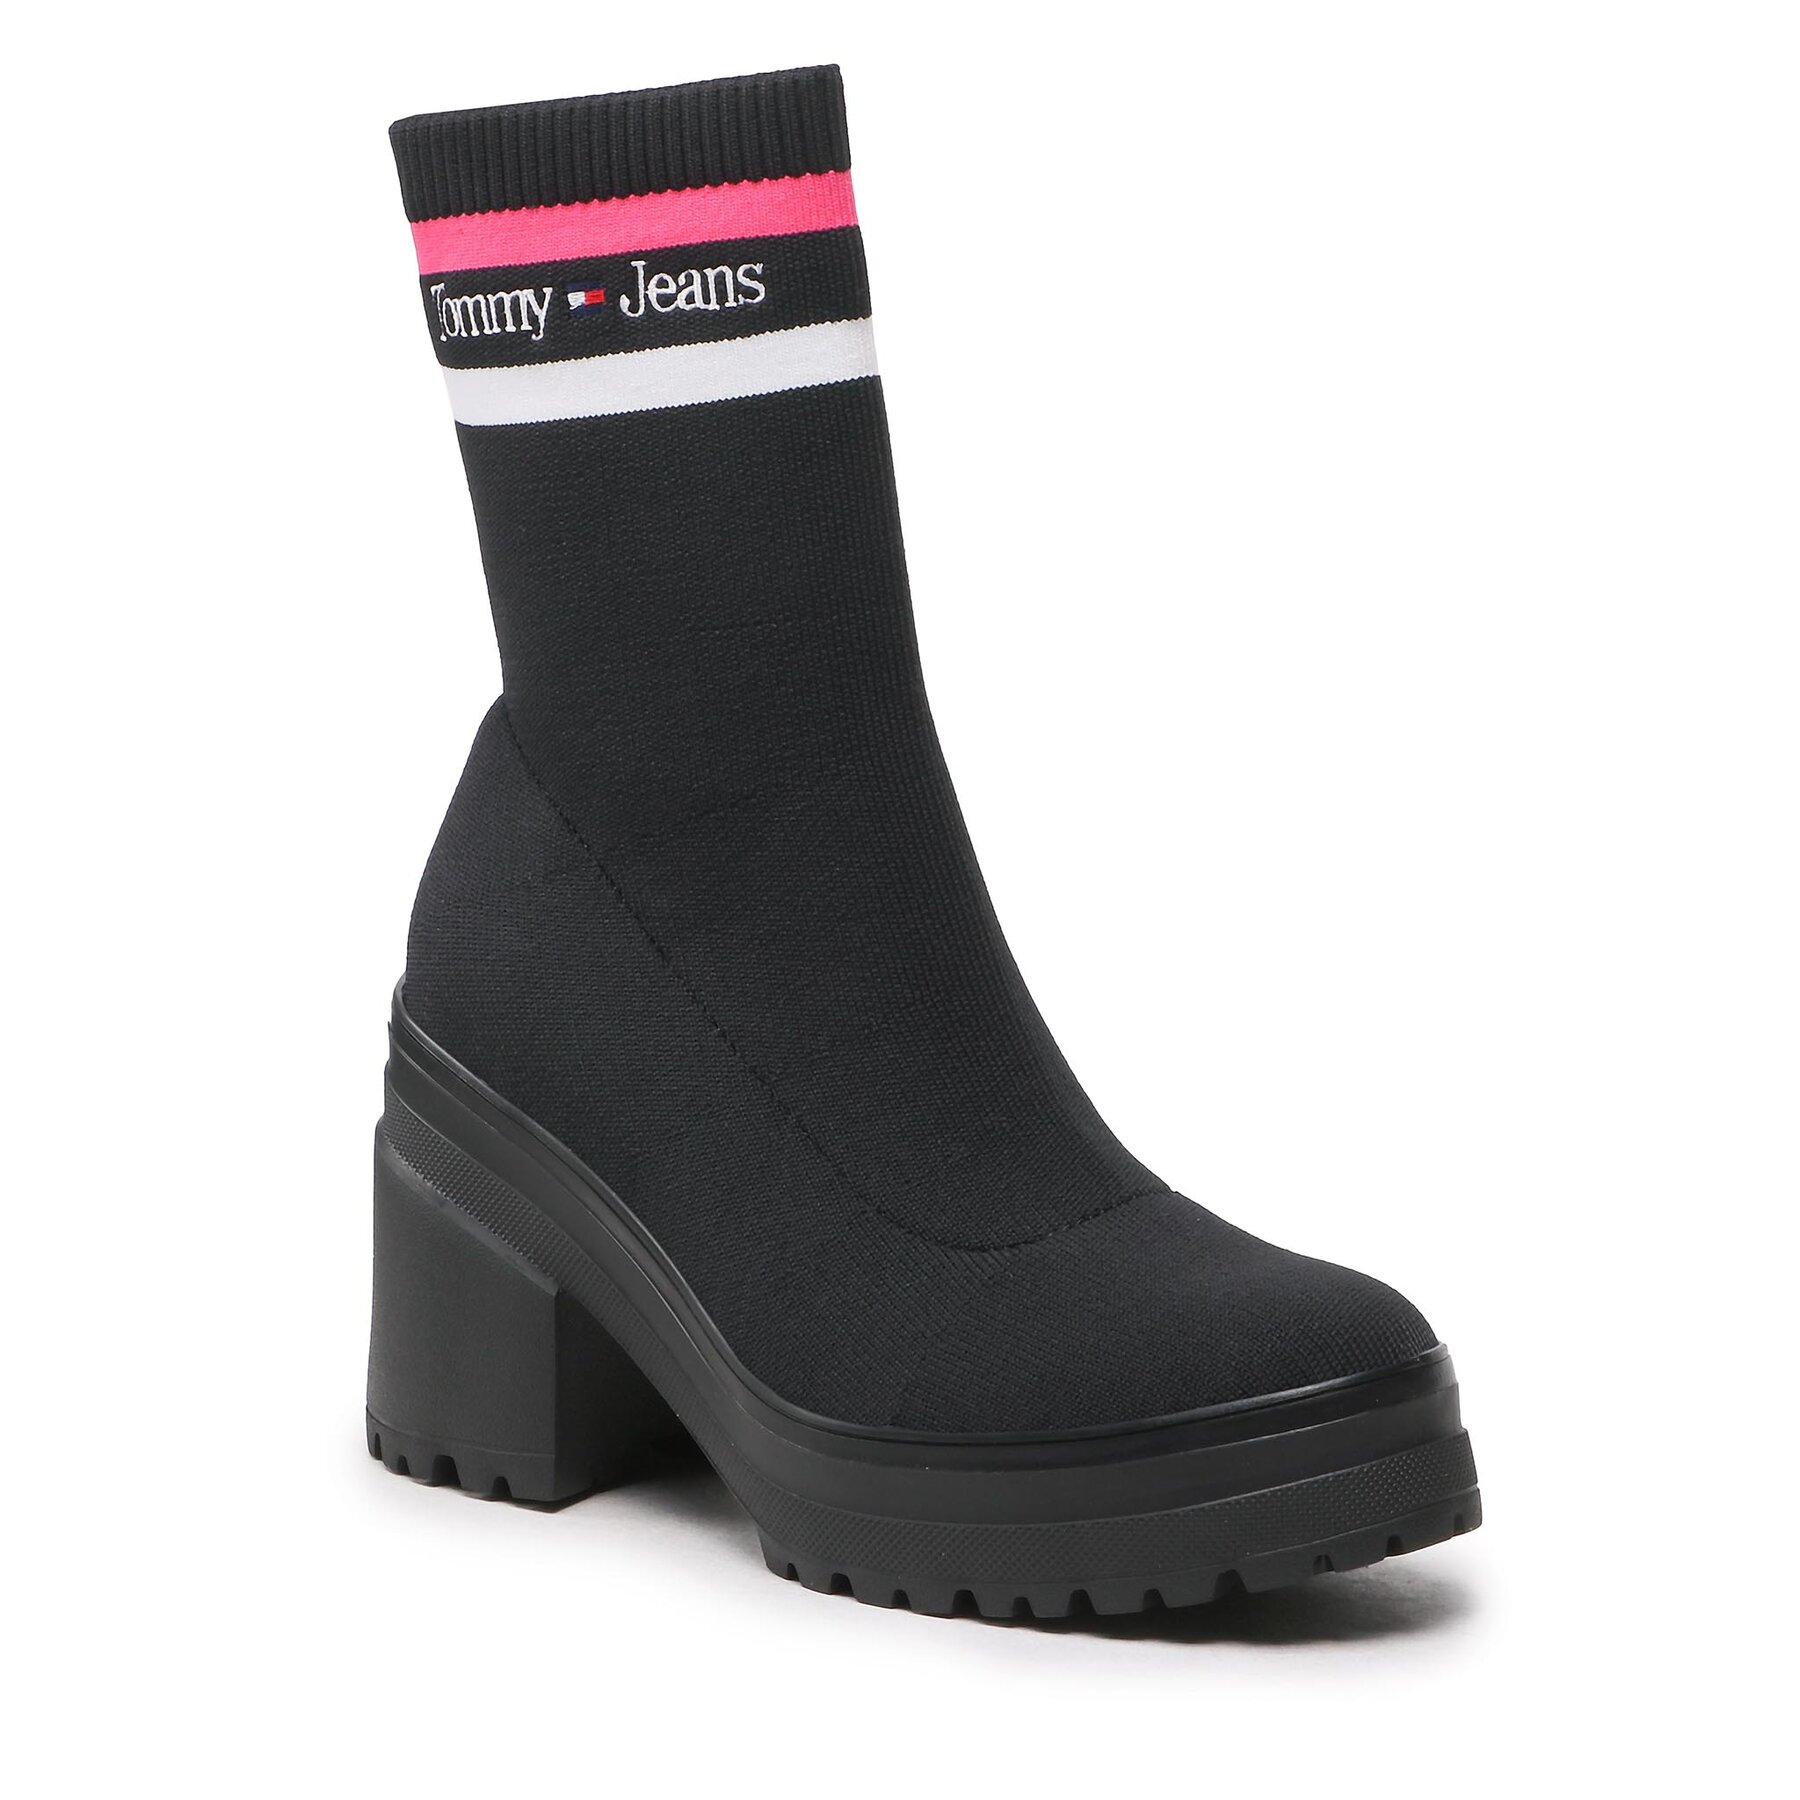 Botine Tommy Jeans Knitted Boot EN0EN02061 Black And Jewel Pink 0GJ